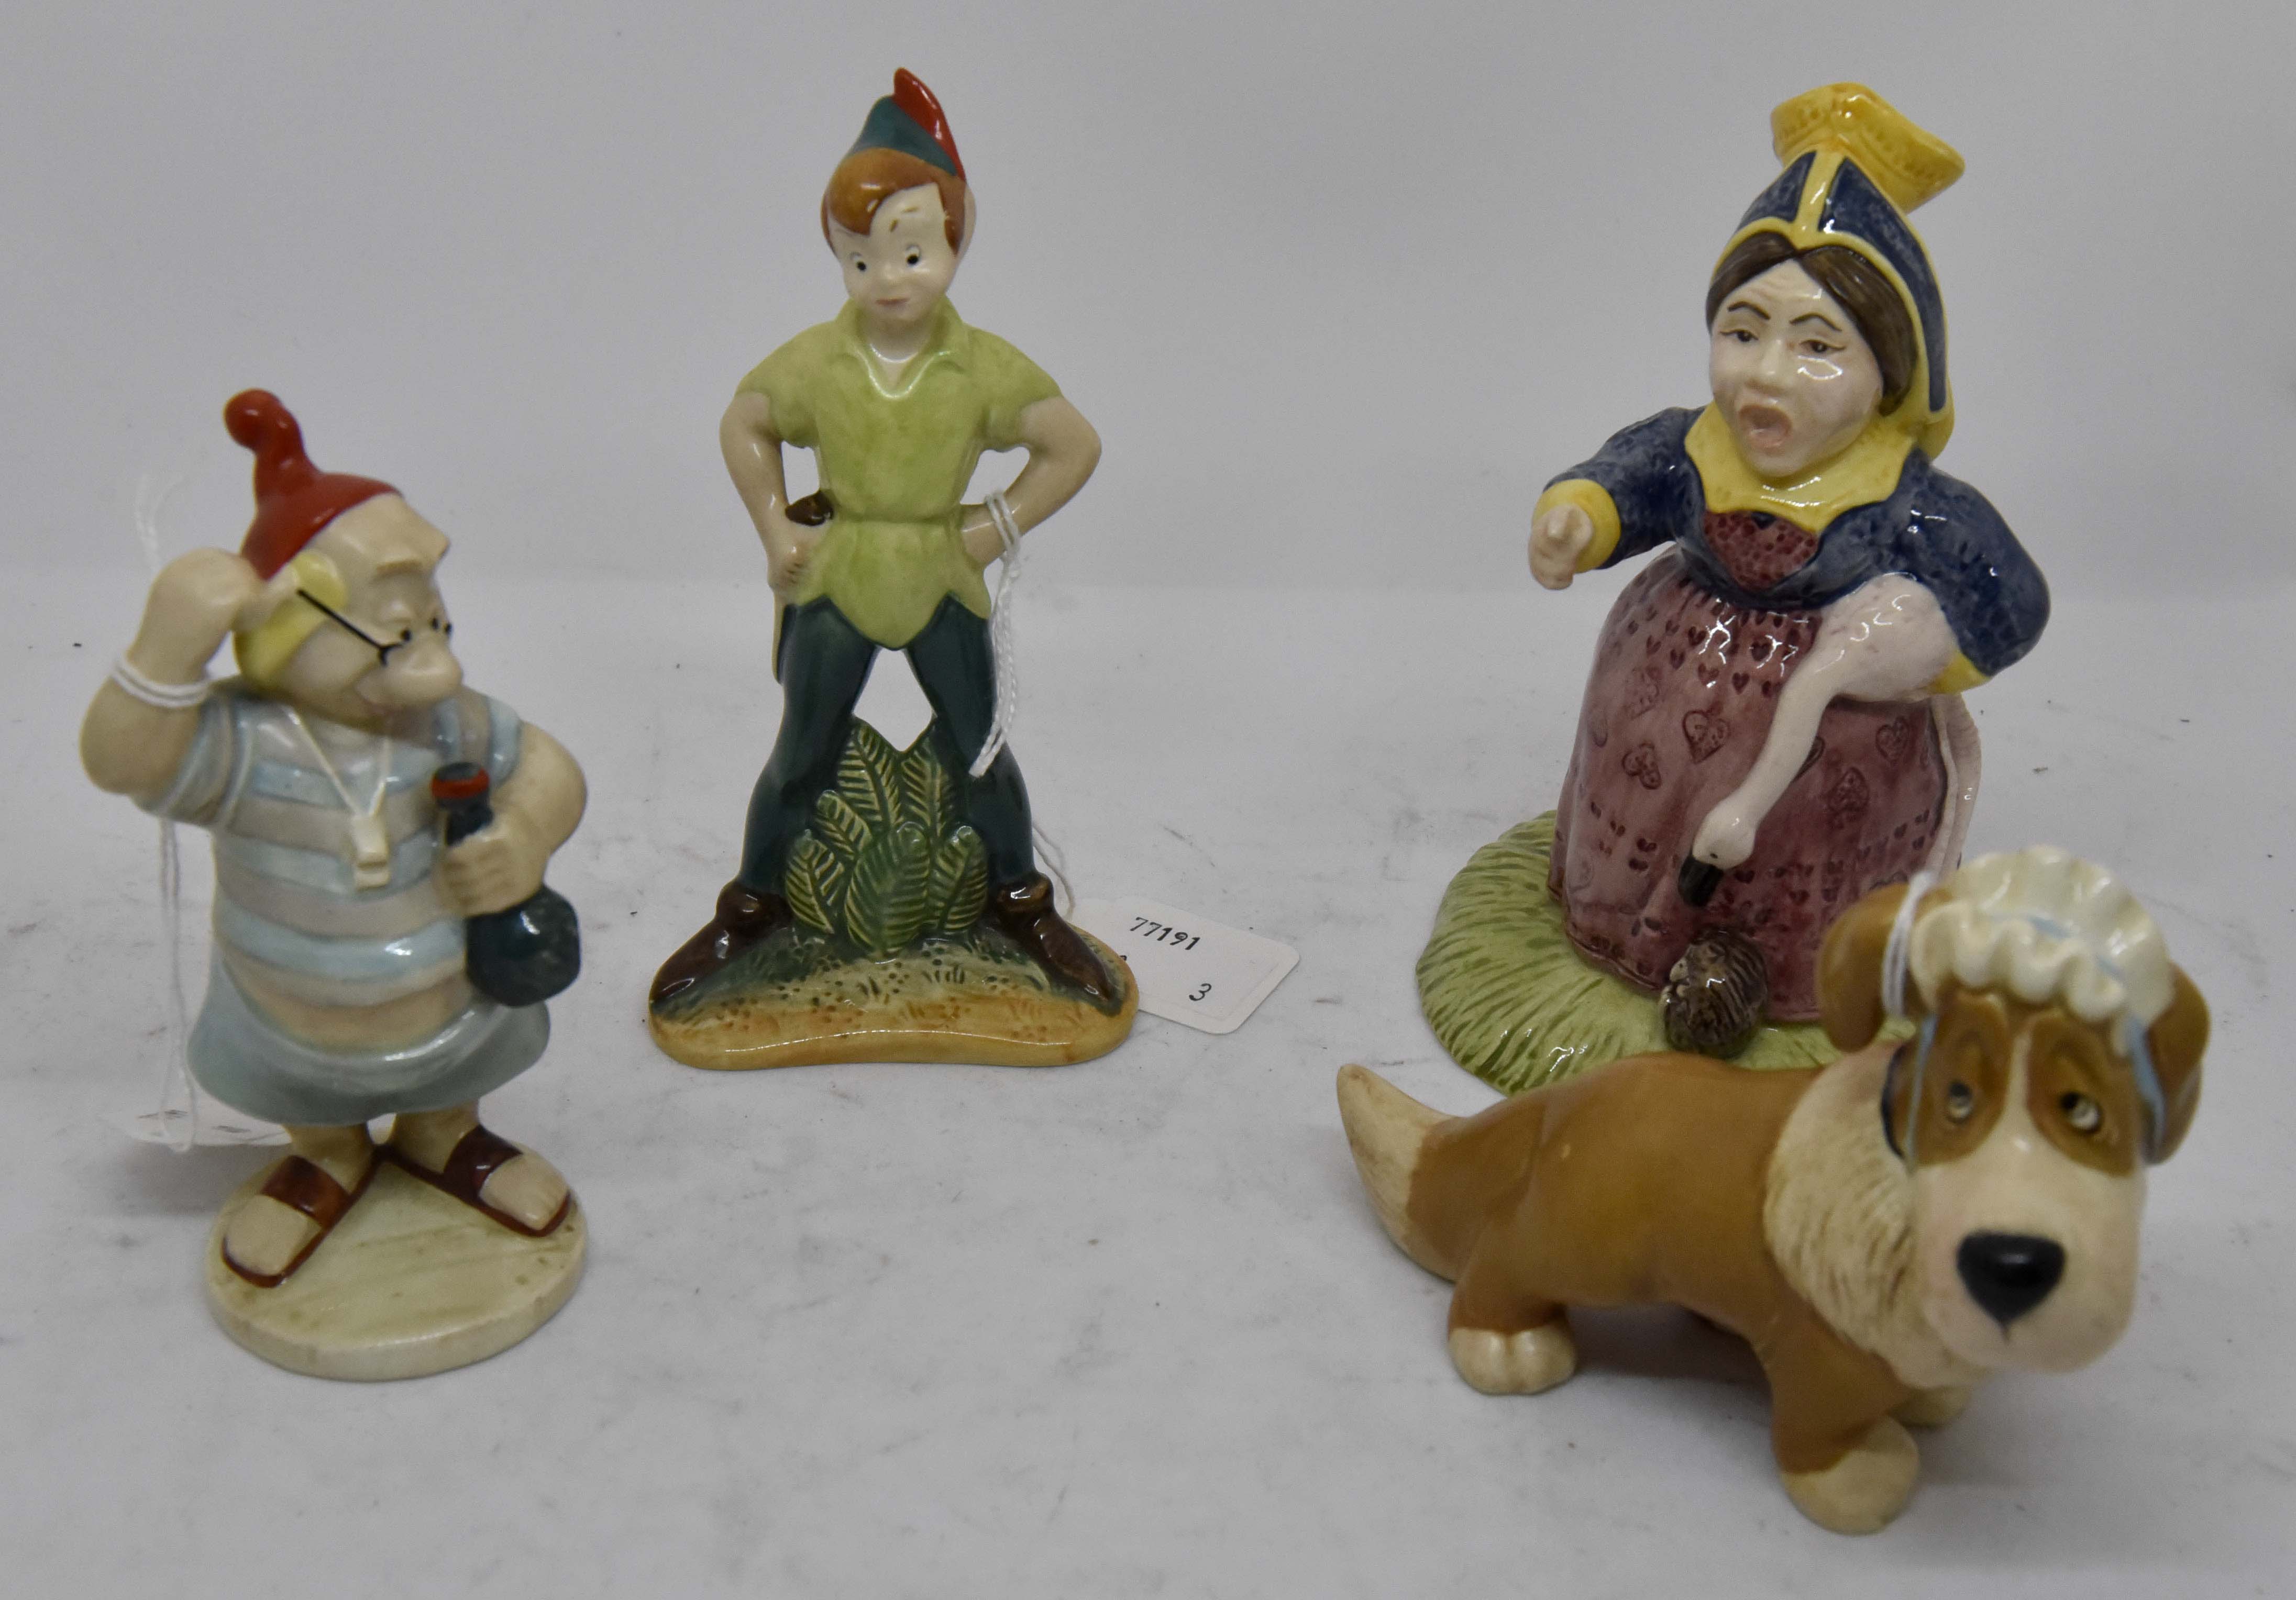 Beswick Disney figurines to include; Peter Pan, Nana, Smee,